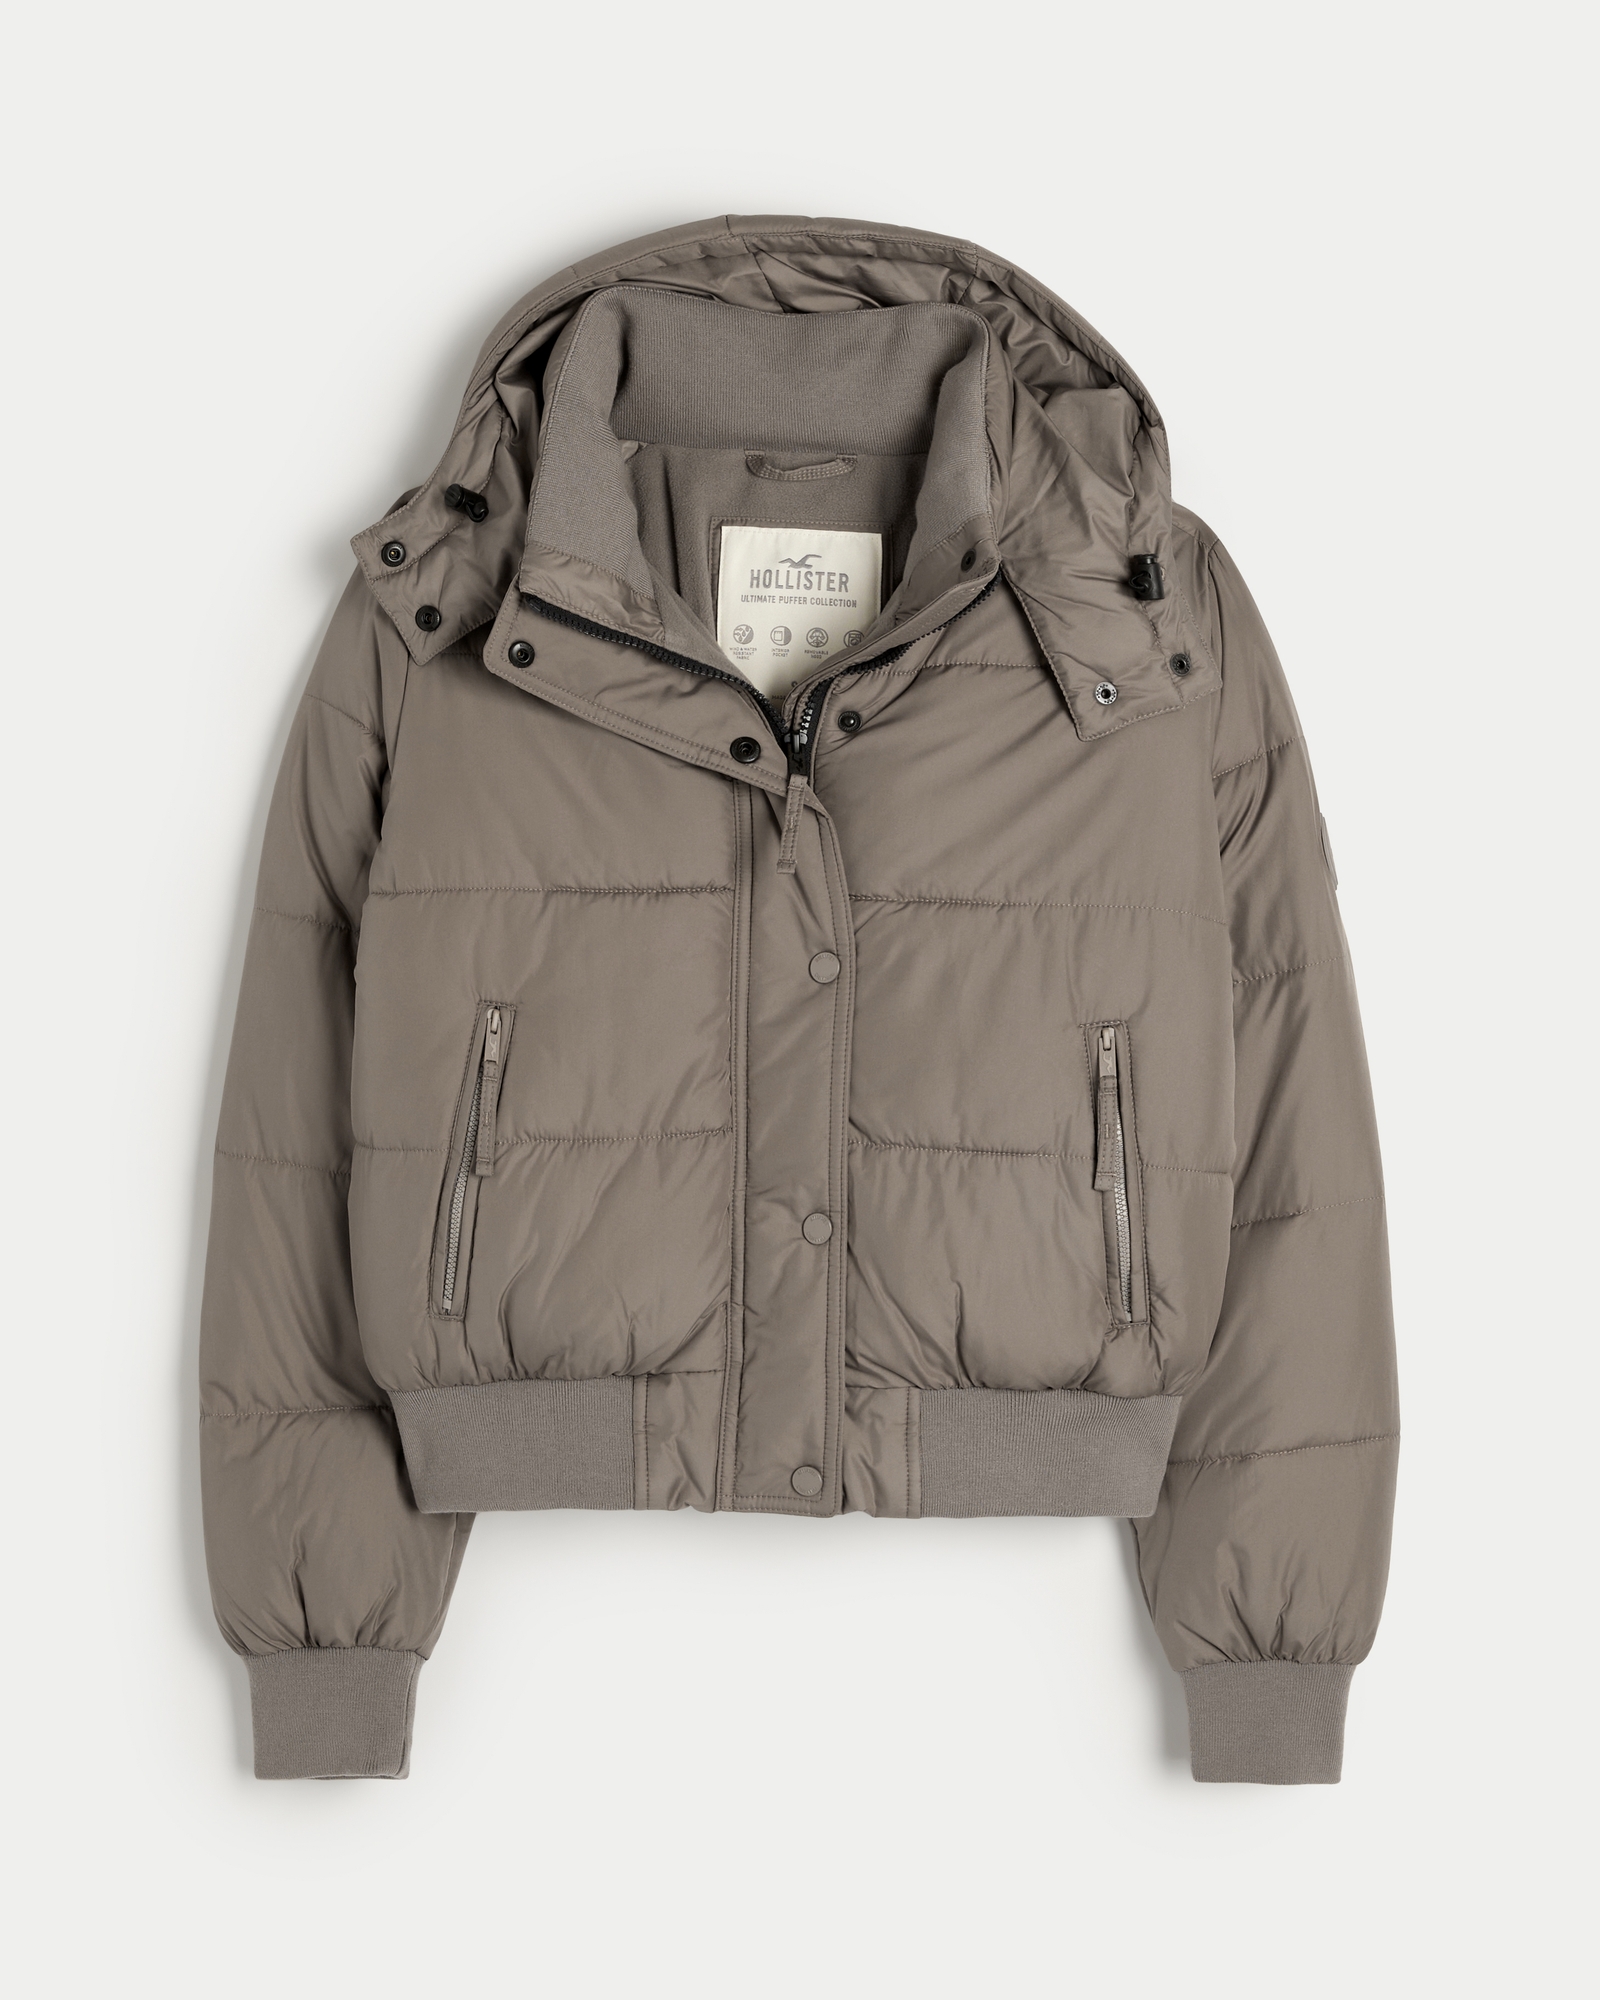 New hollister puffer jacket XXL - Coats & Jackets - Leamington